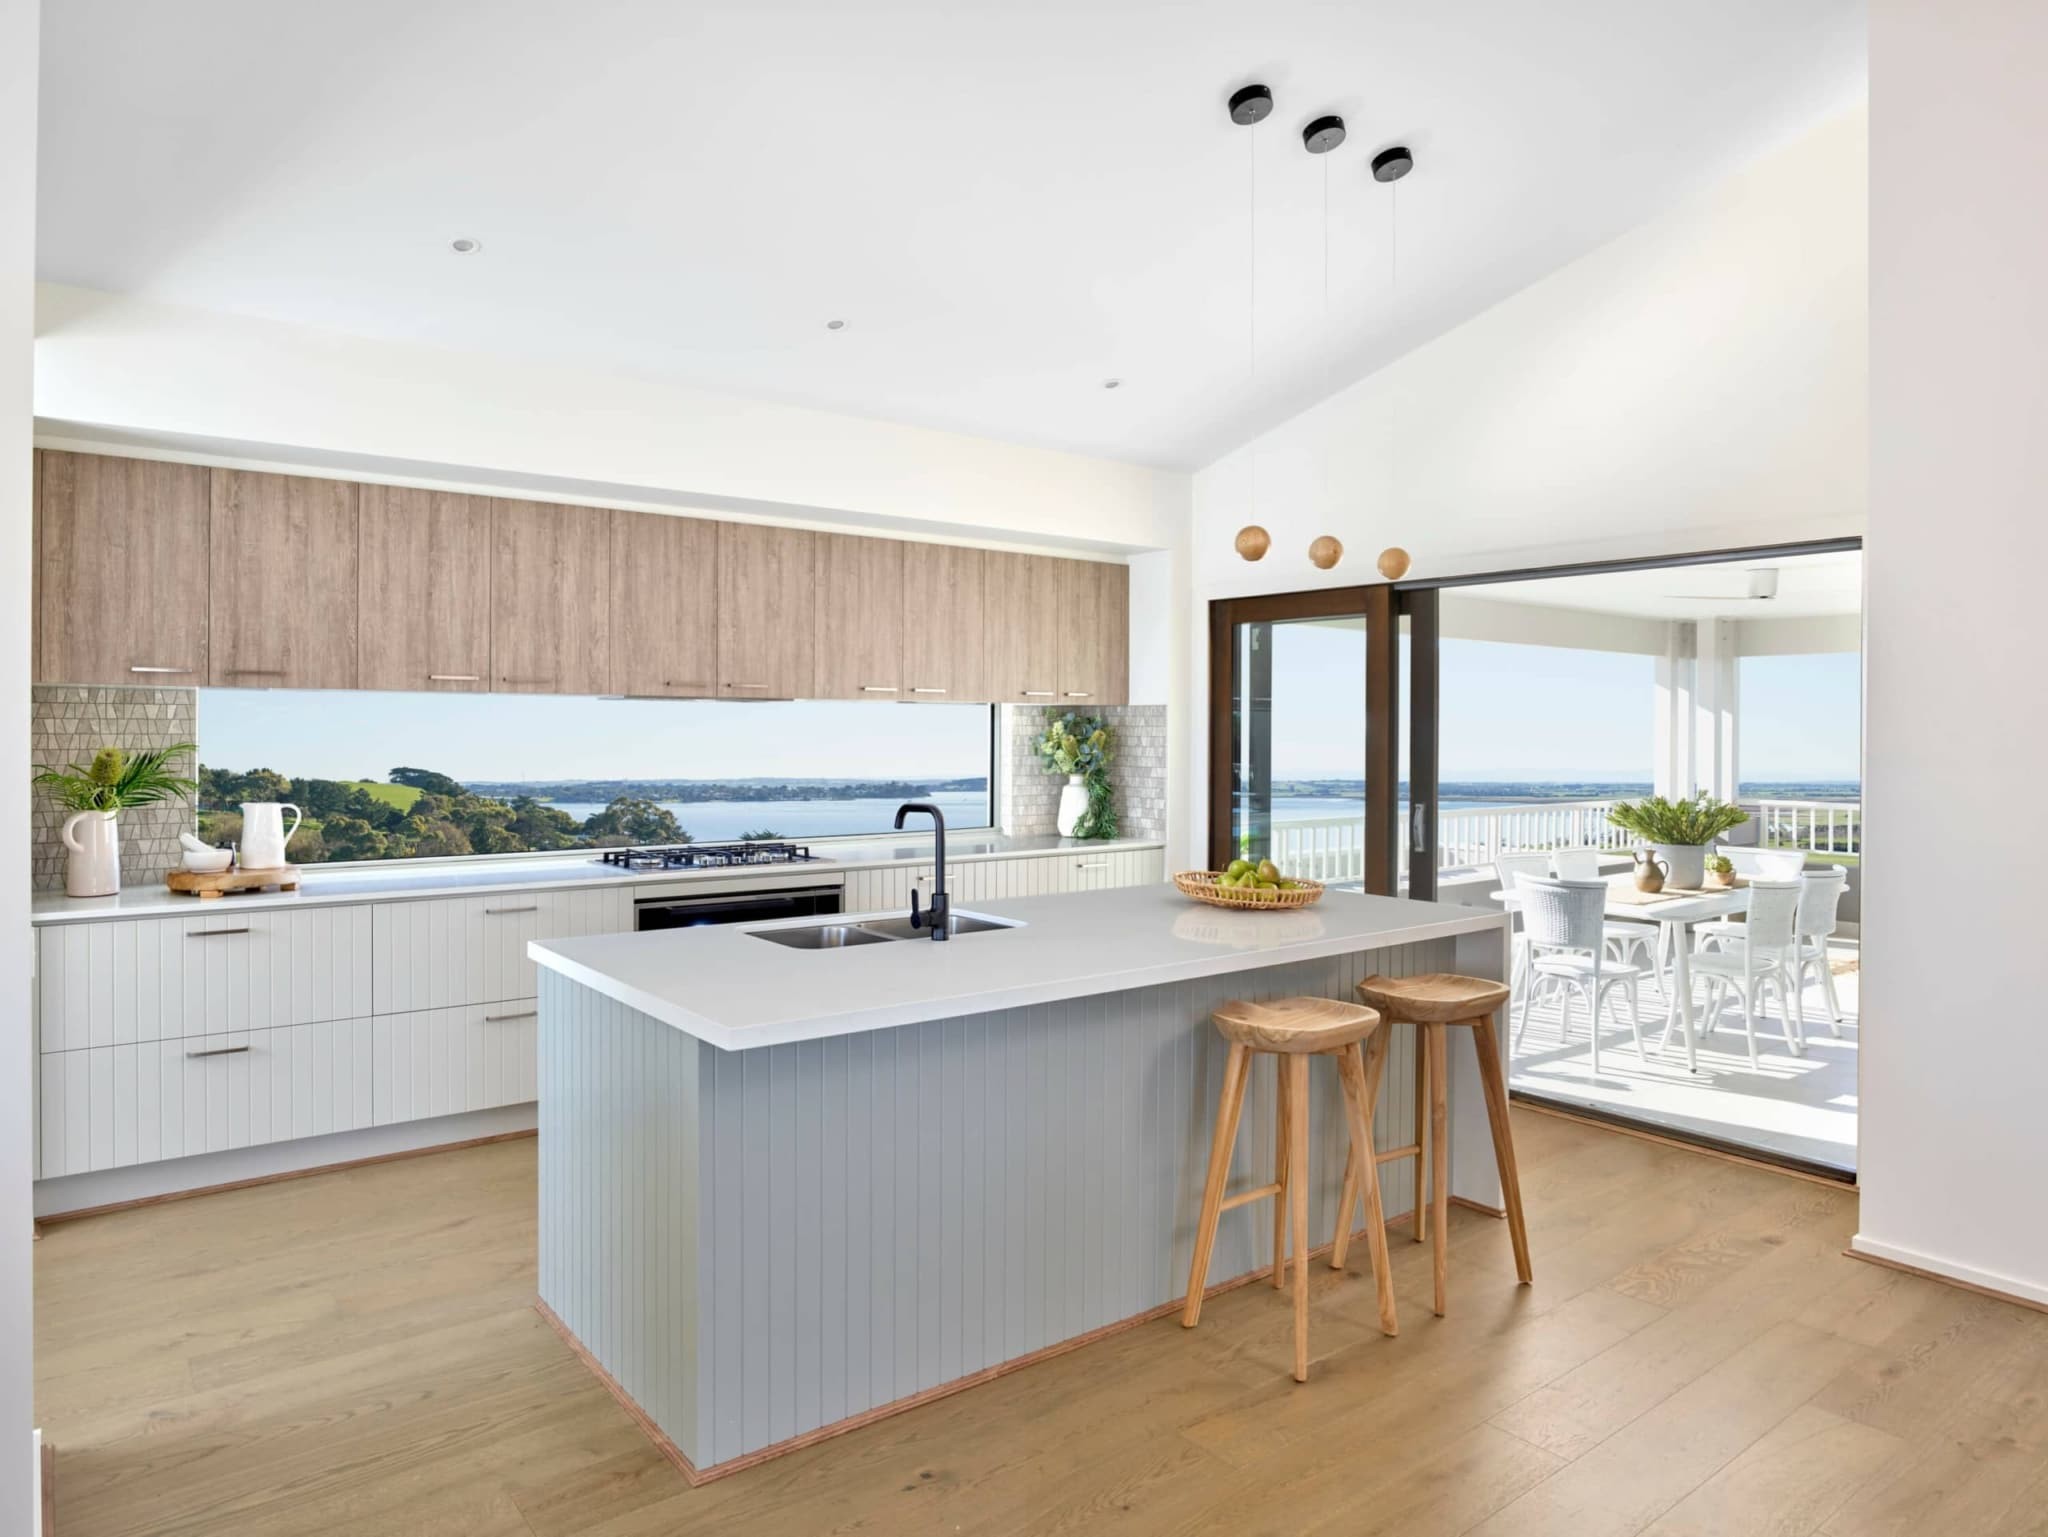 metricon coastal kitchen with vj panel cabinets and glass window splashback